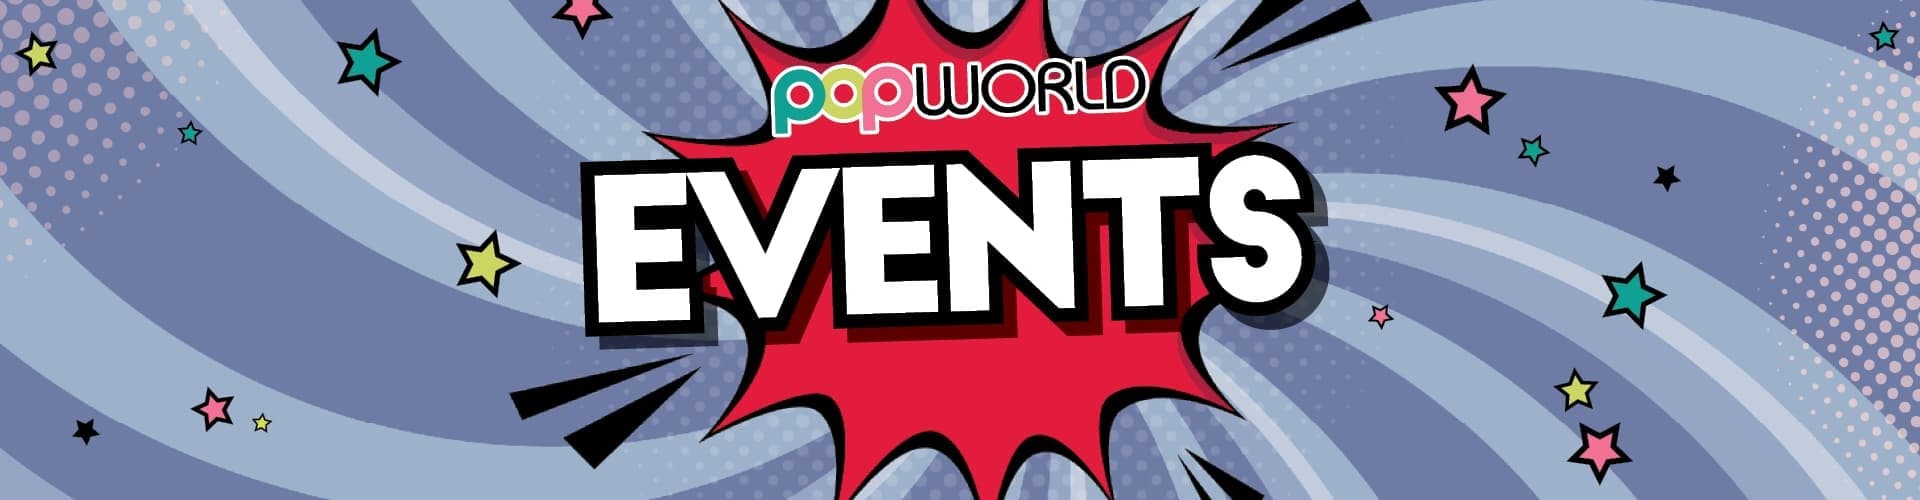 Events at Popworld and Zinc Redditch